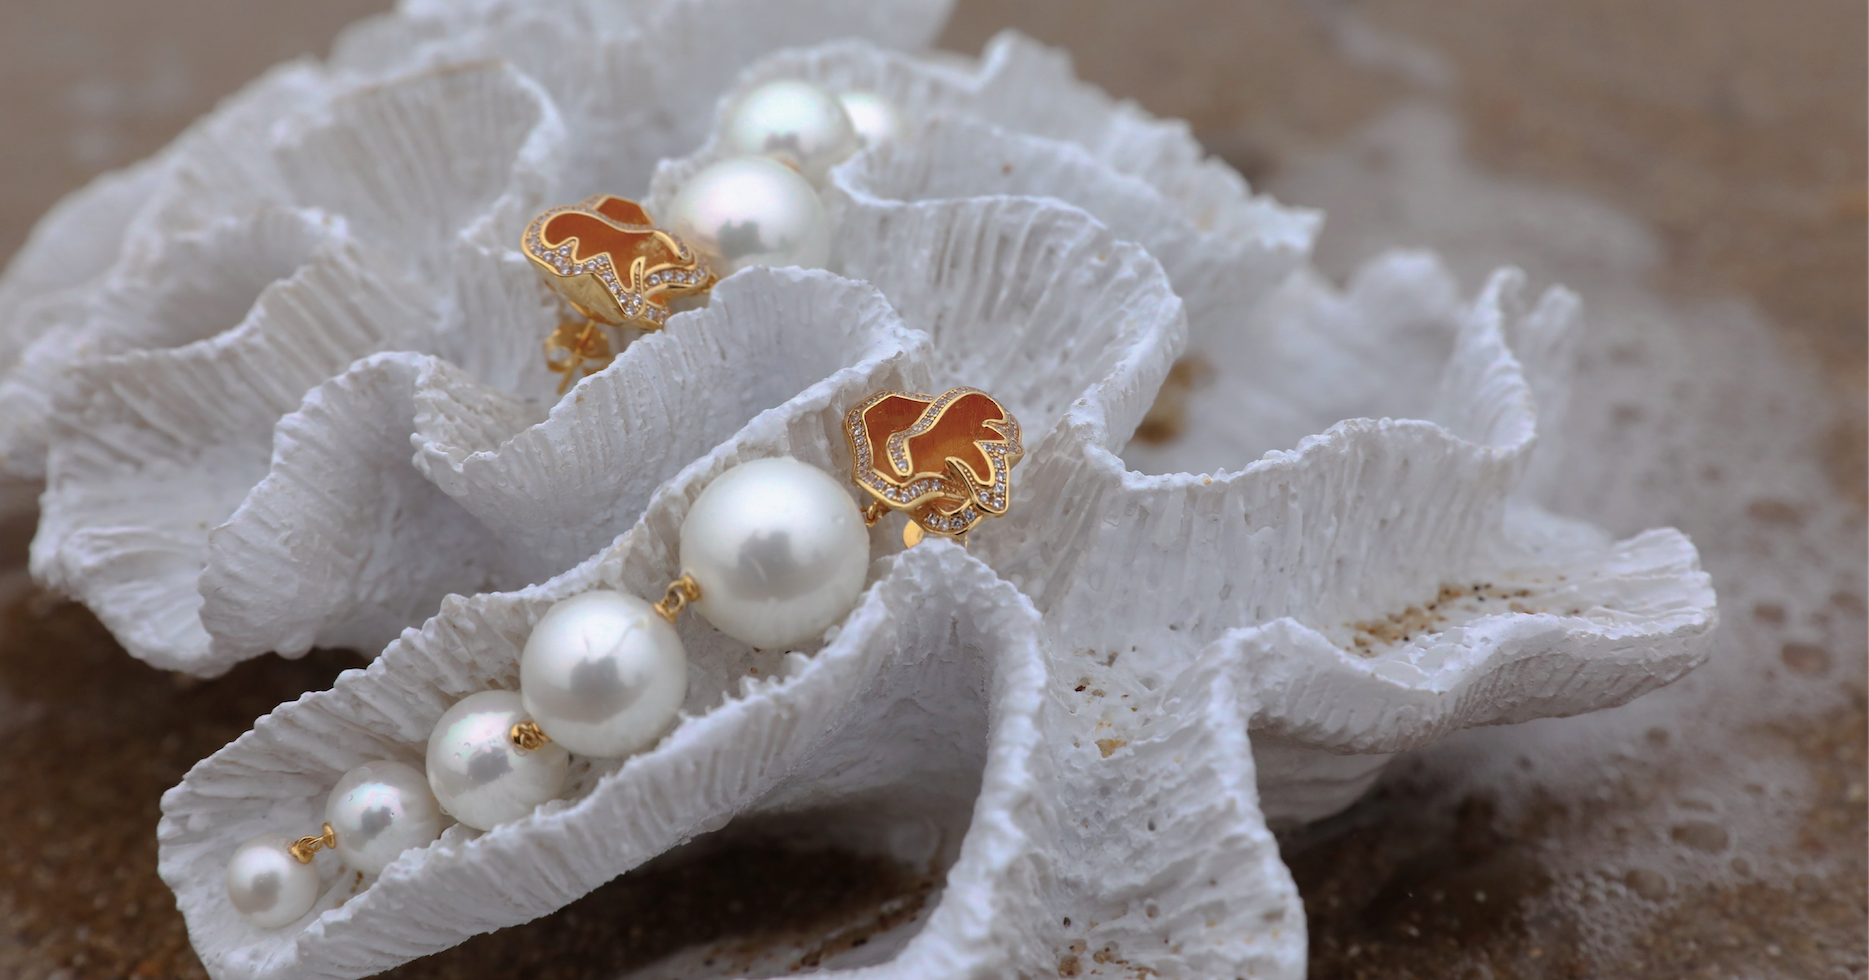 Pair of bespoke pearl bridal earrings resting in a sea shell, made by Georgia Wang